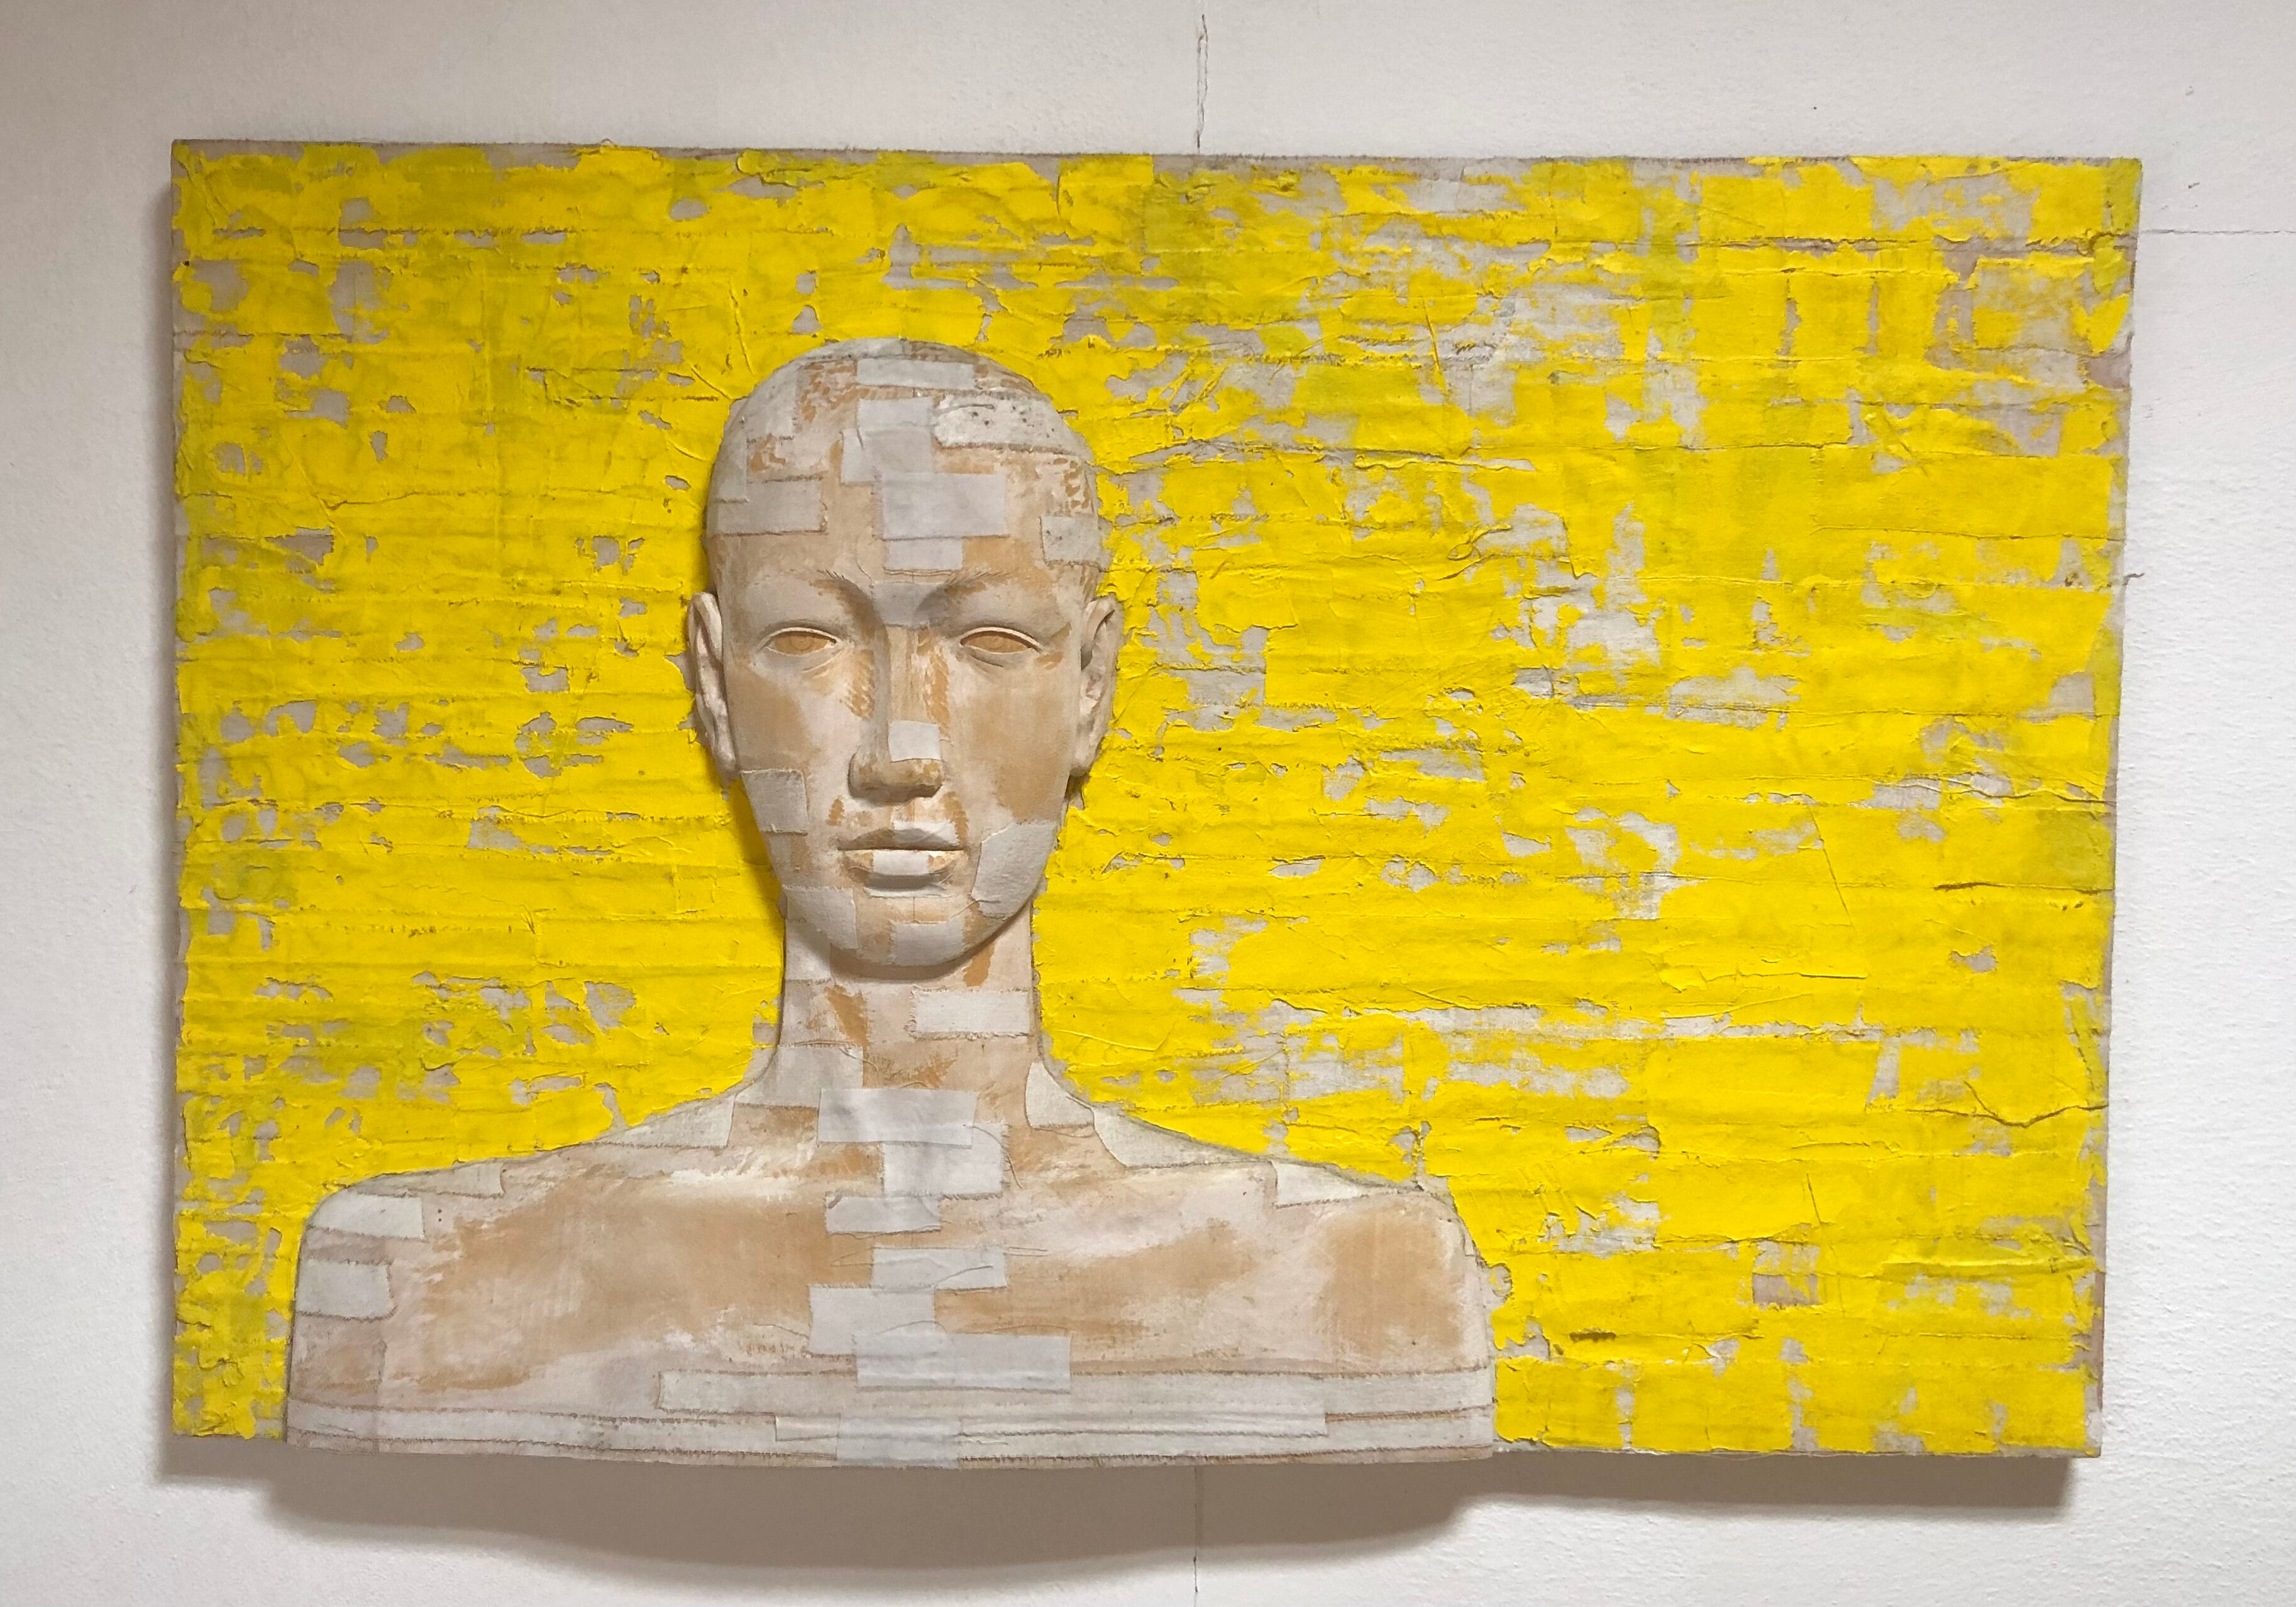 Sculpture "Dream in yellow" (2018)